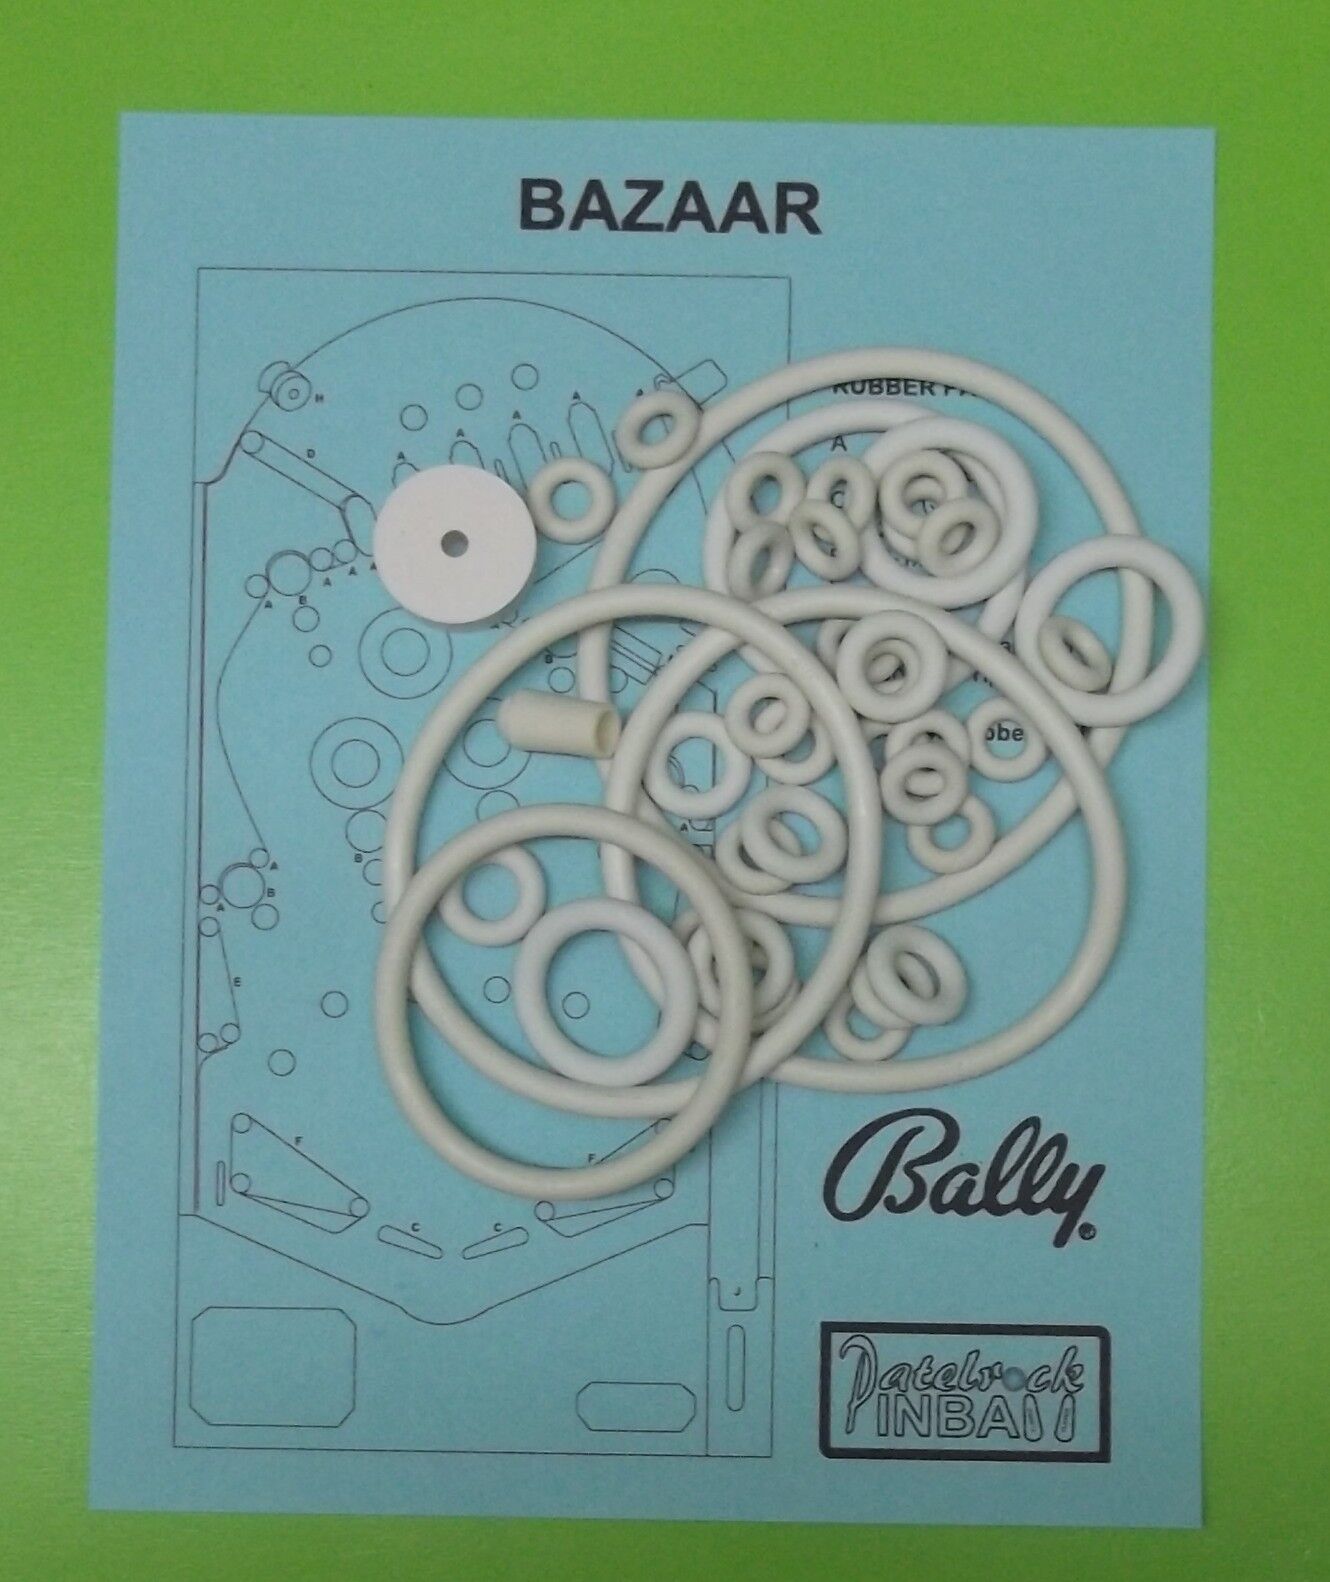 1966 Bally Bazaar pinball rubber ring kit